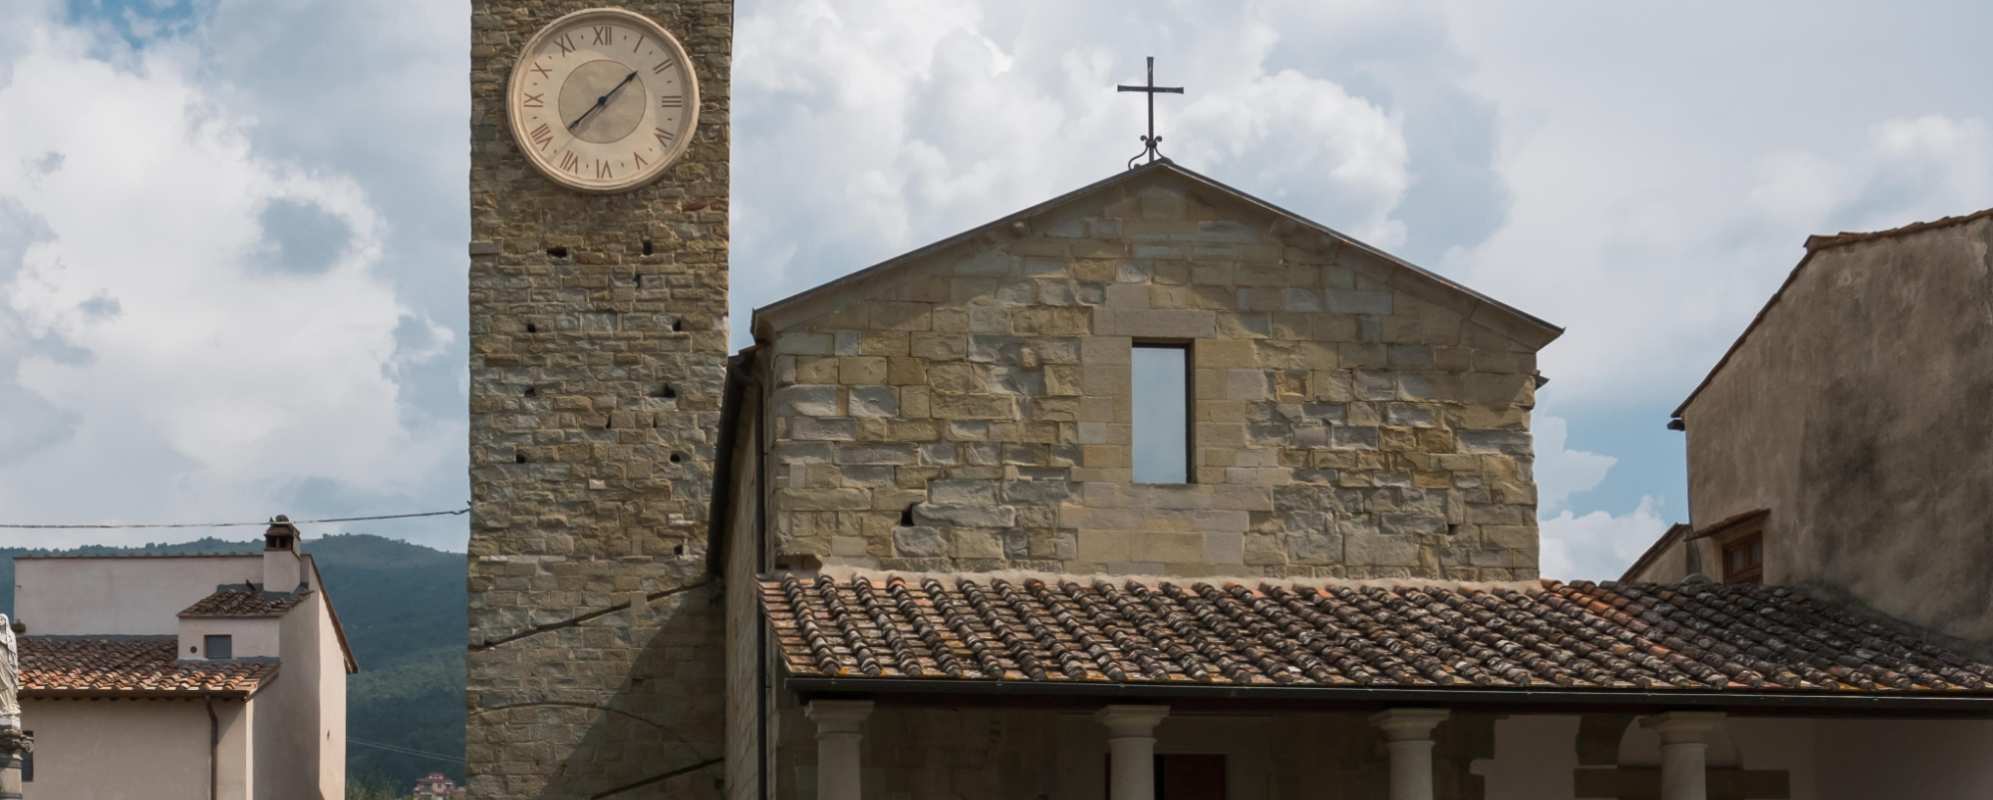 La chiesa di Sant'Agata ad Arfoli